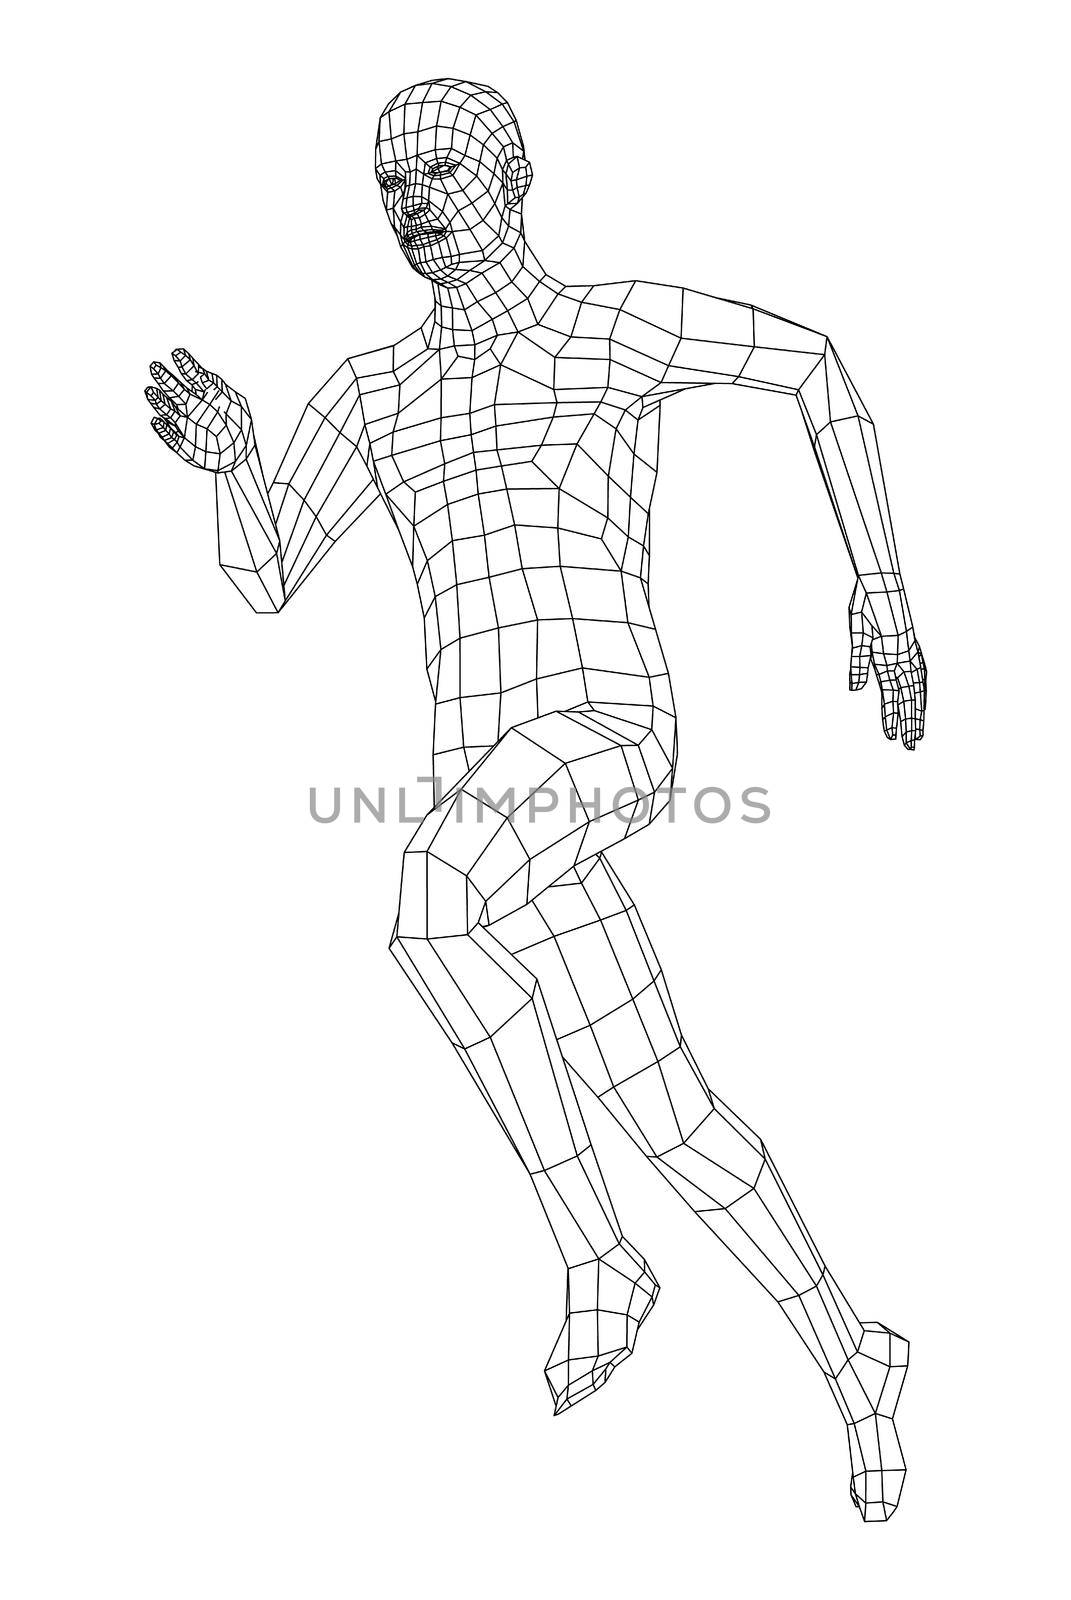 Wireframe running man. 3d illustration by cherezoff